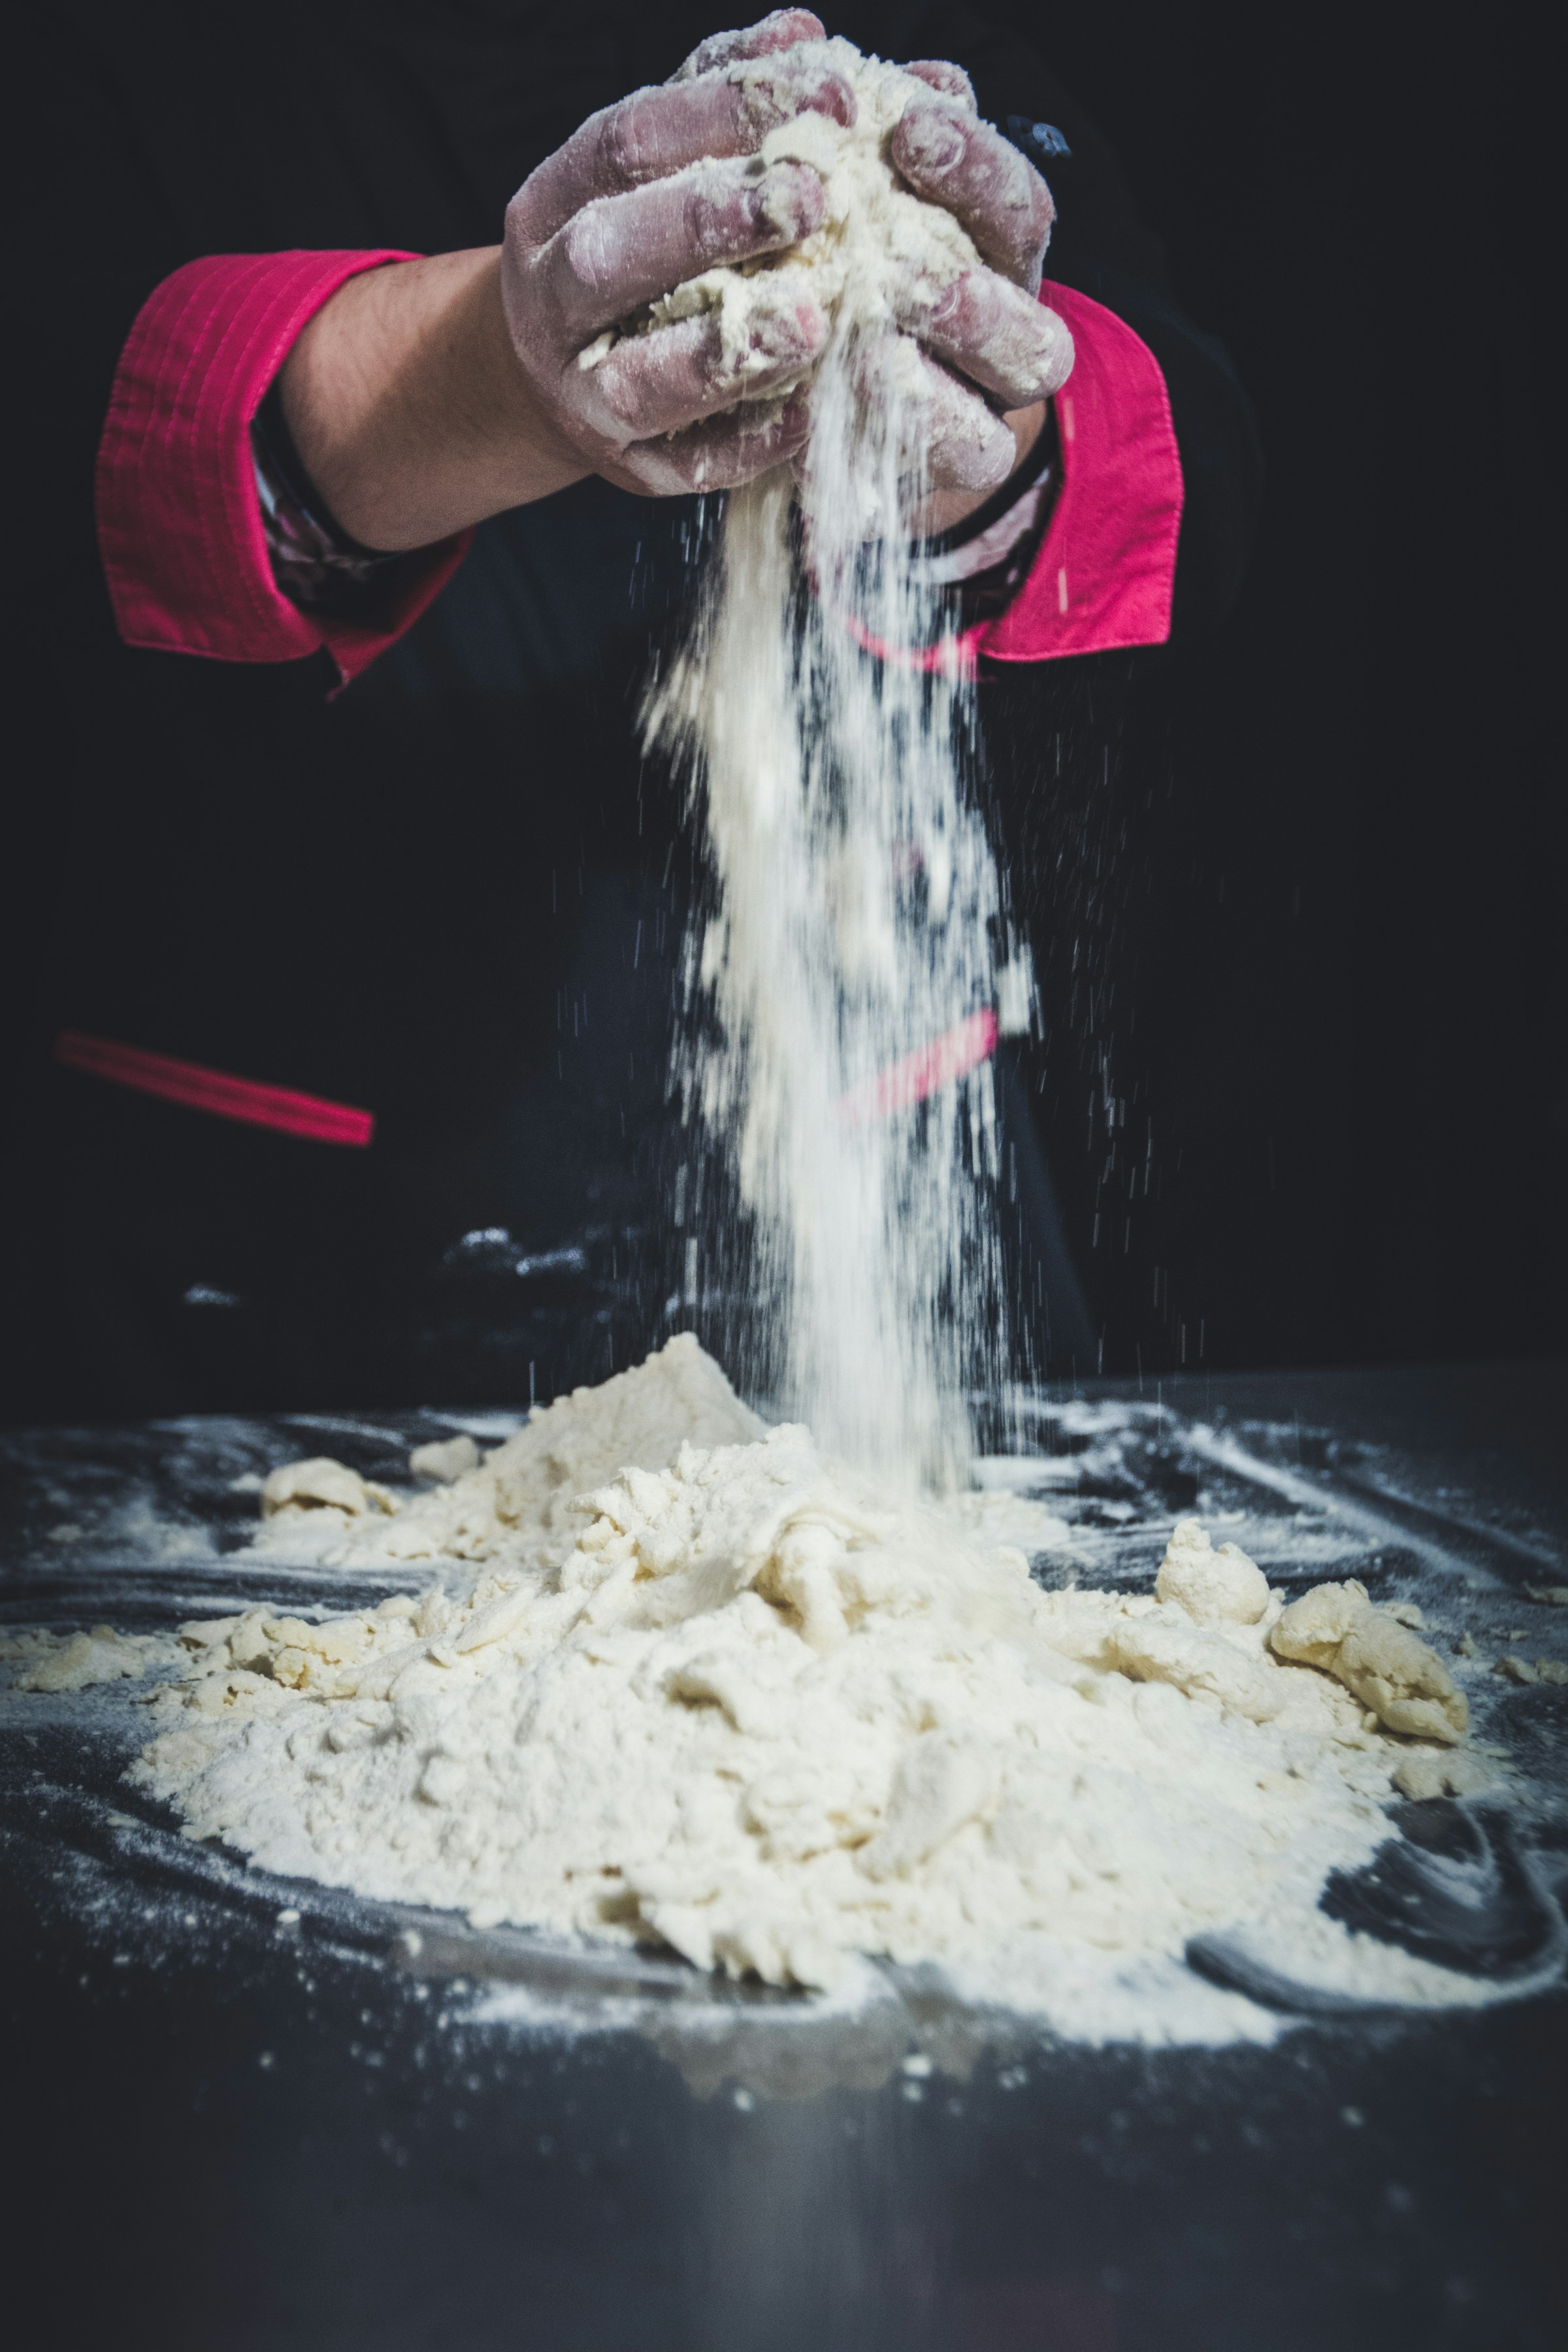 A person mixing dough | Source: Unsplash